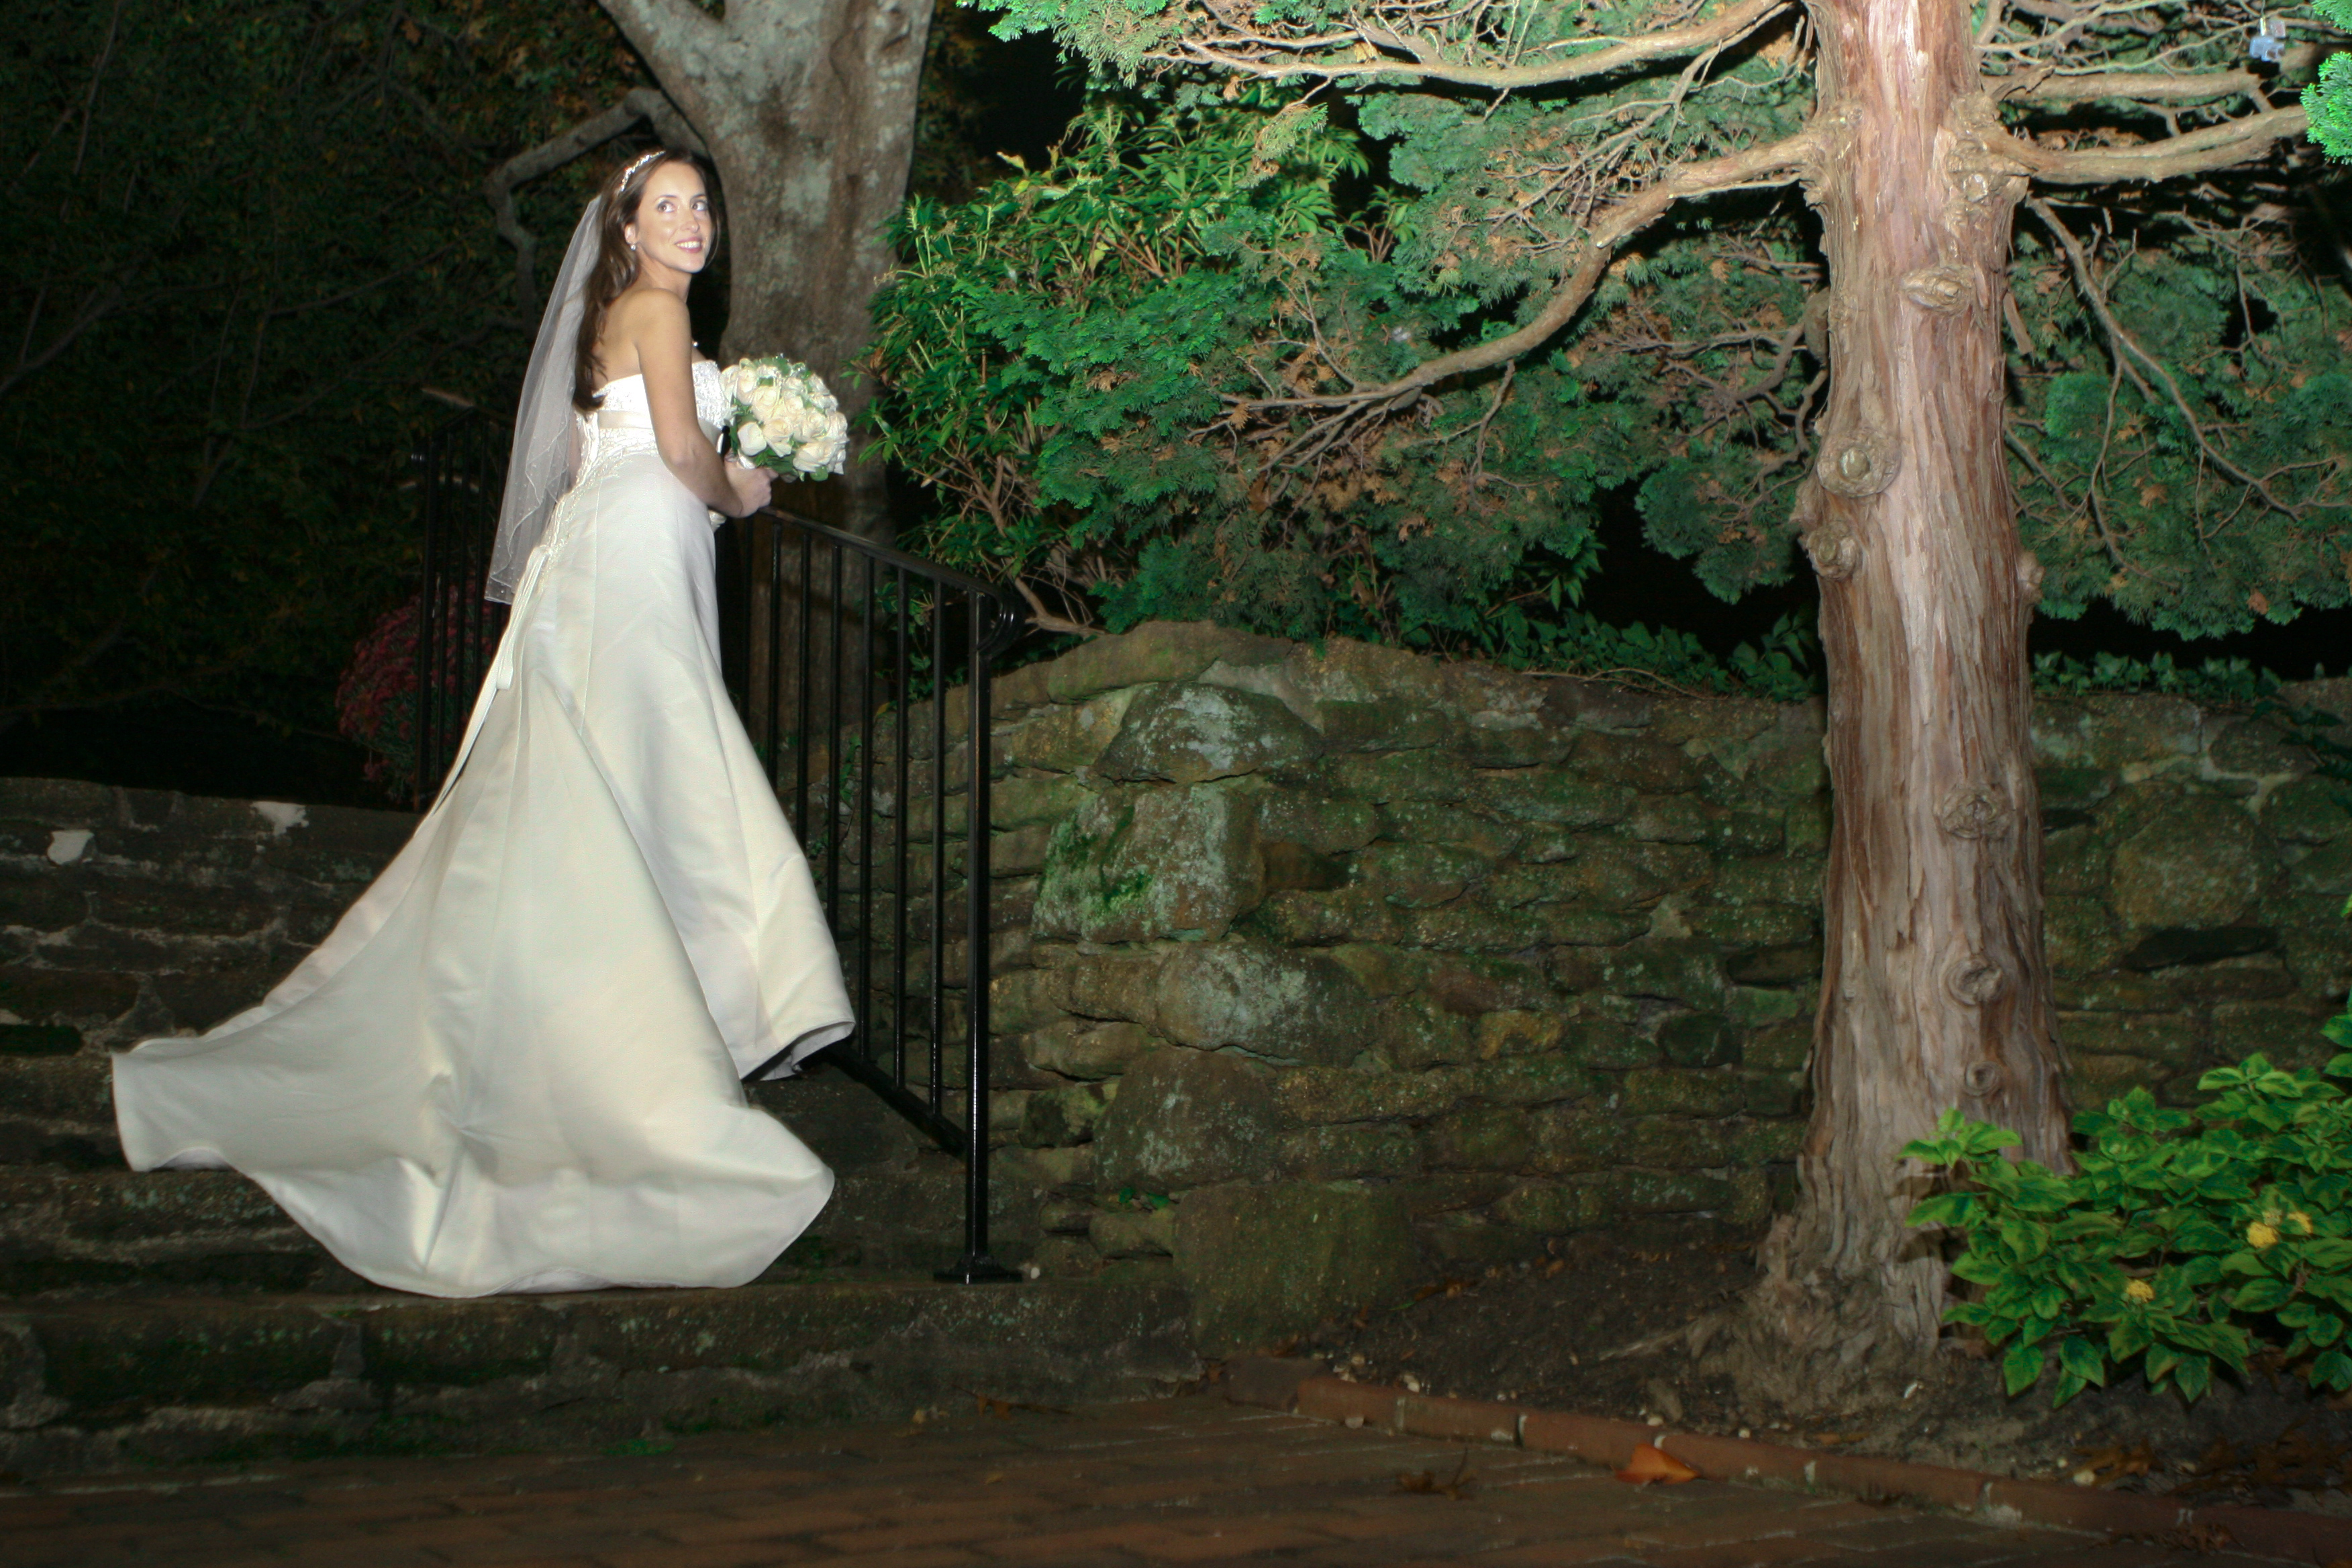 Kinkora NJ Wedding Photographer Info